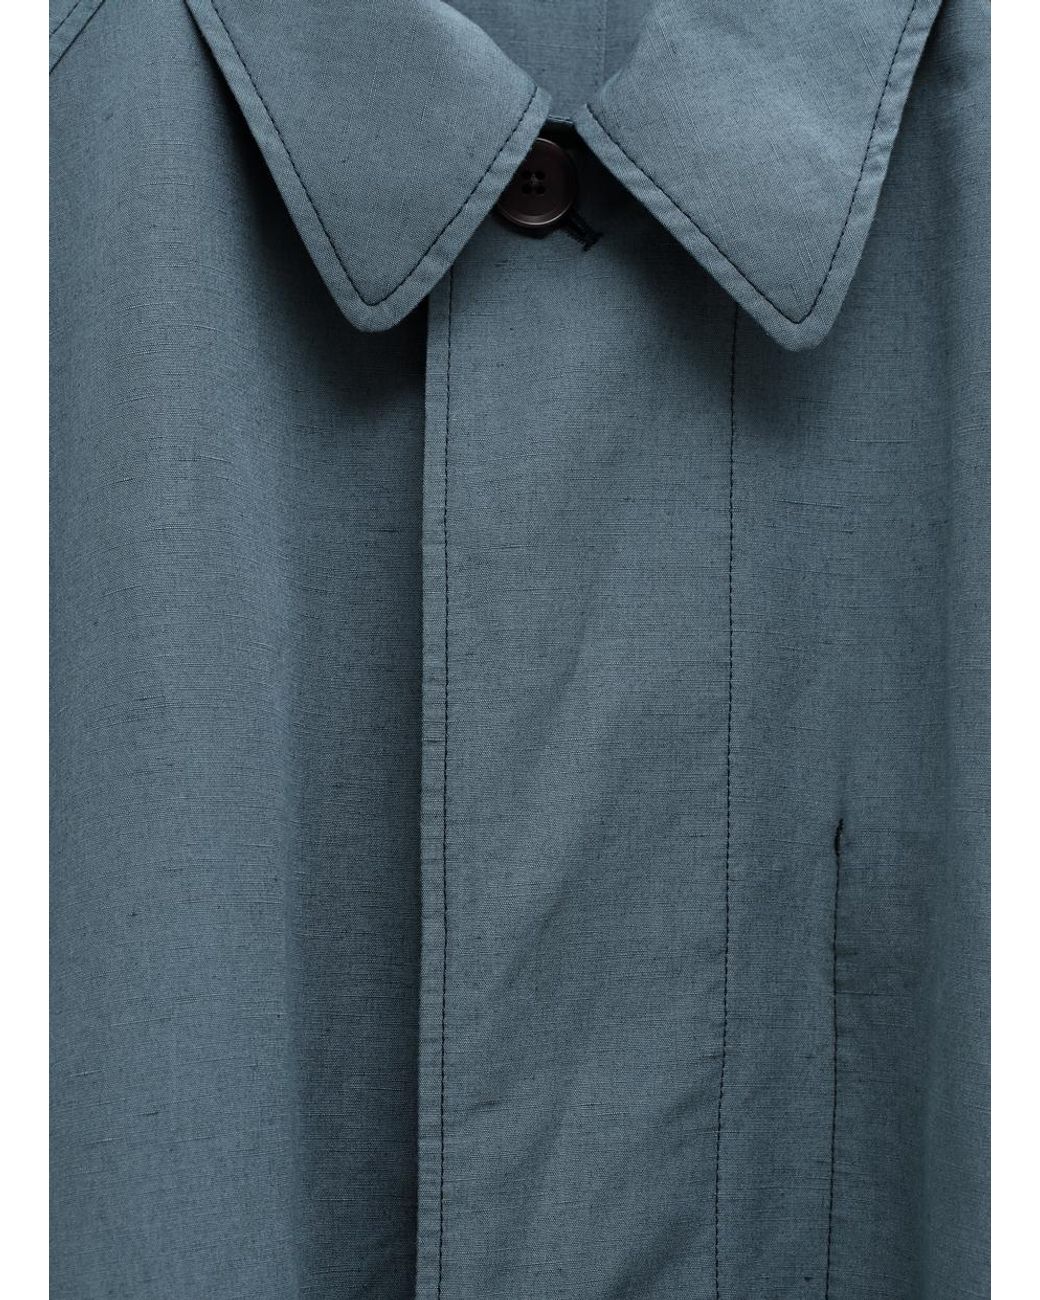 Lemaire Coat - Blue Coats, Clothing - CHE26683